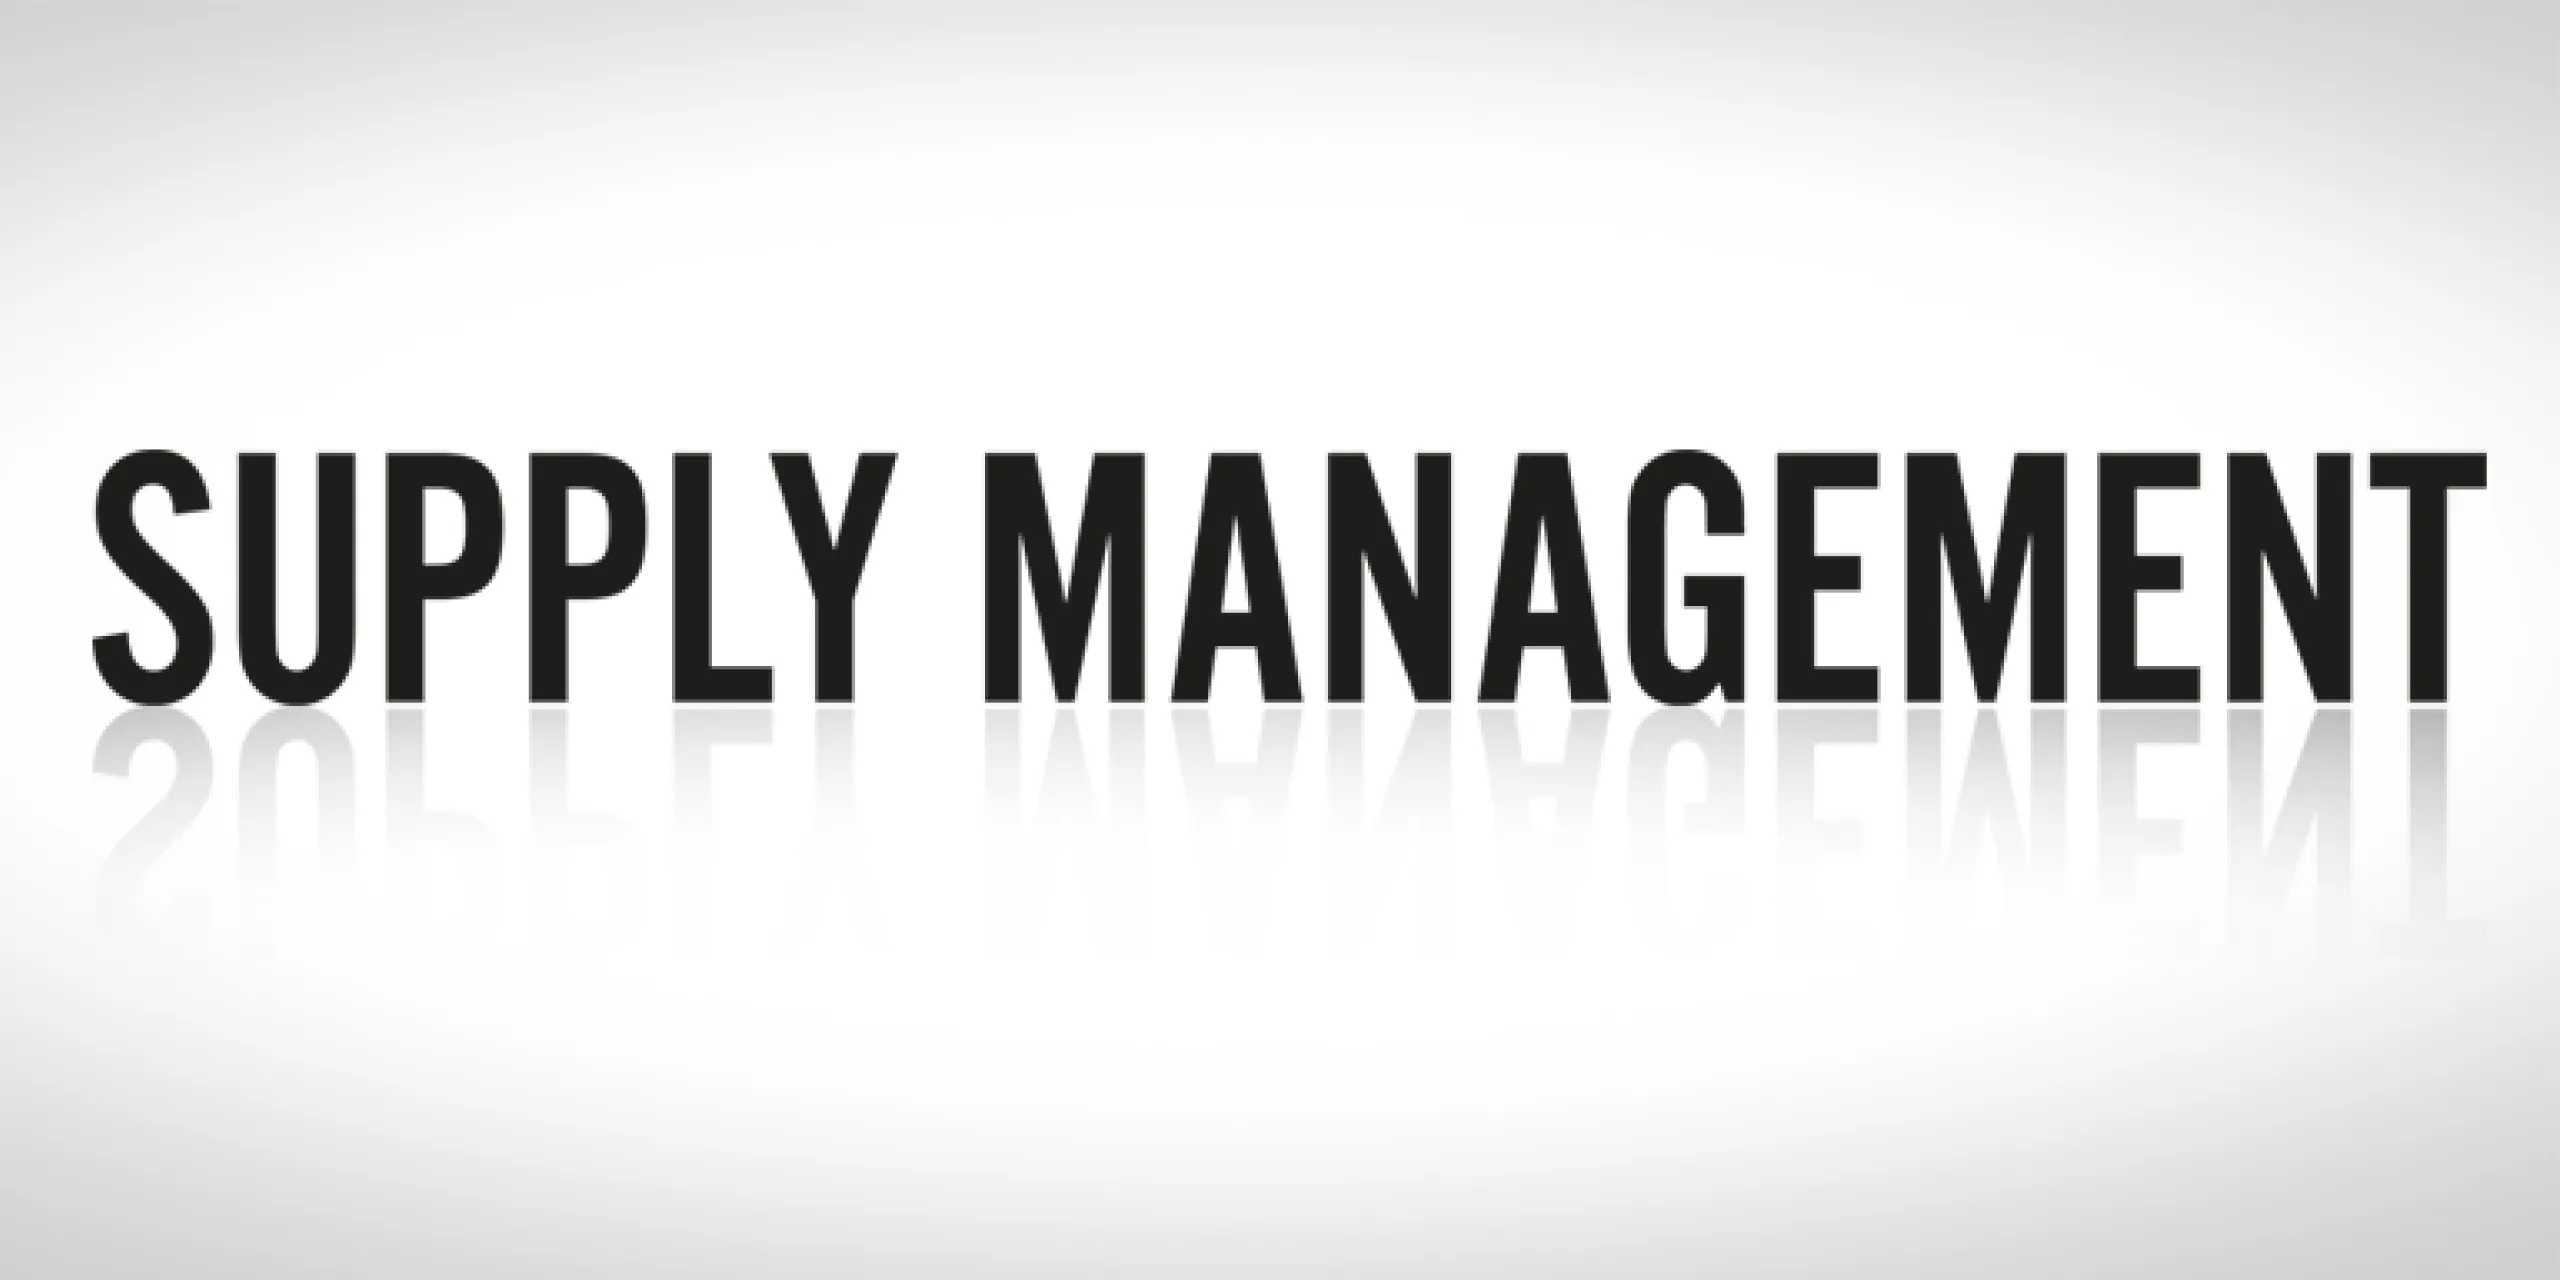 Supply Management logo